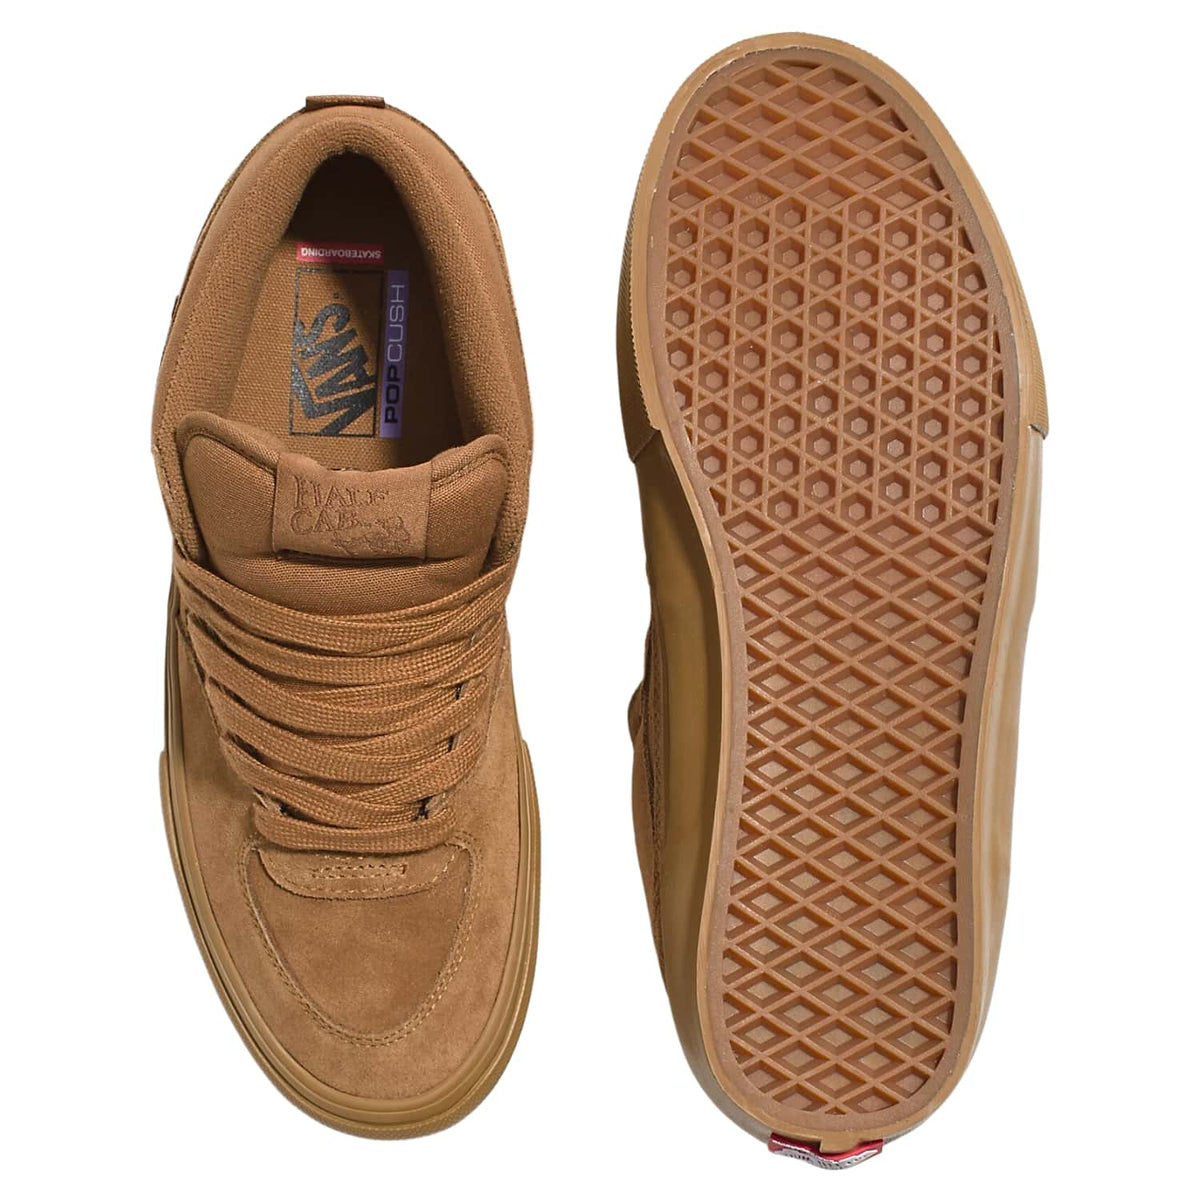 Vans Skate Half Cab Shoes - Brown/Gum